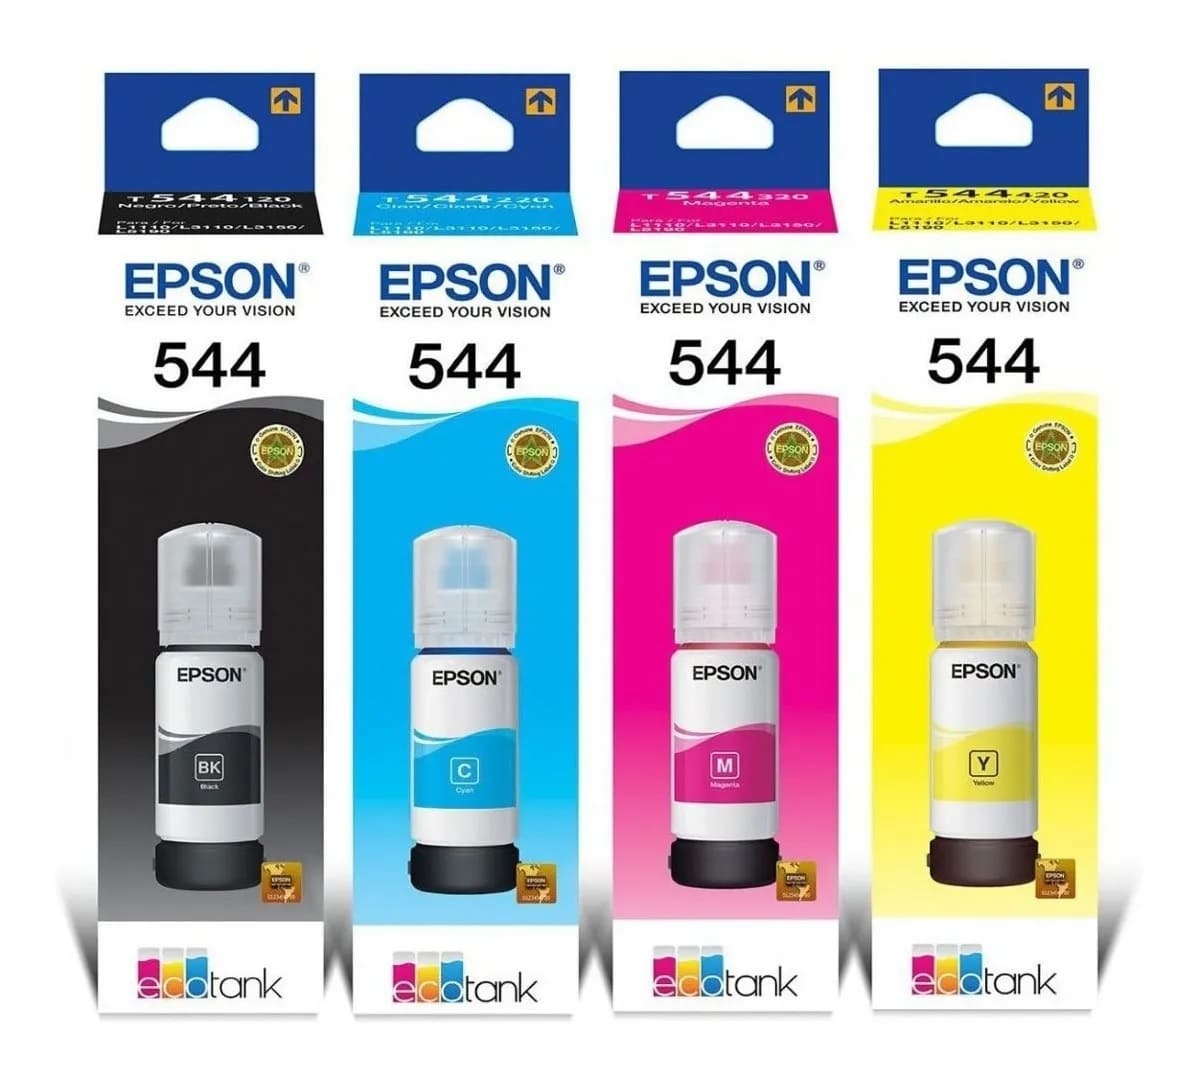 Impresora de Inyección de tinta EPSON L120 ECOTANK + Tint